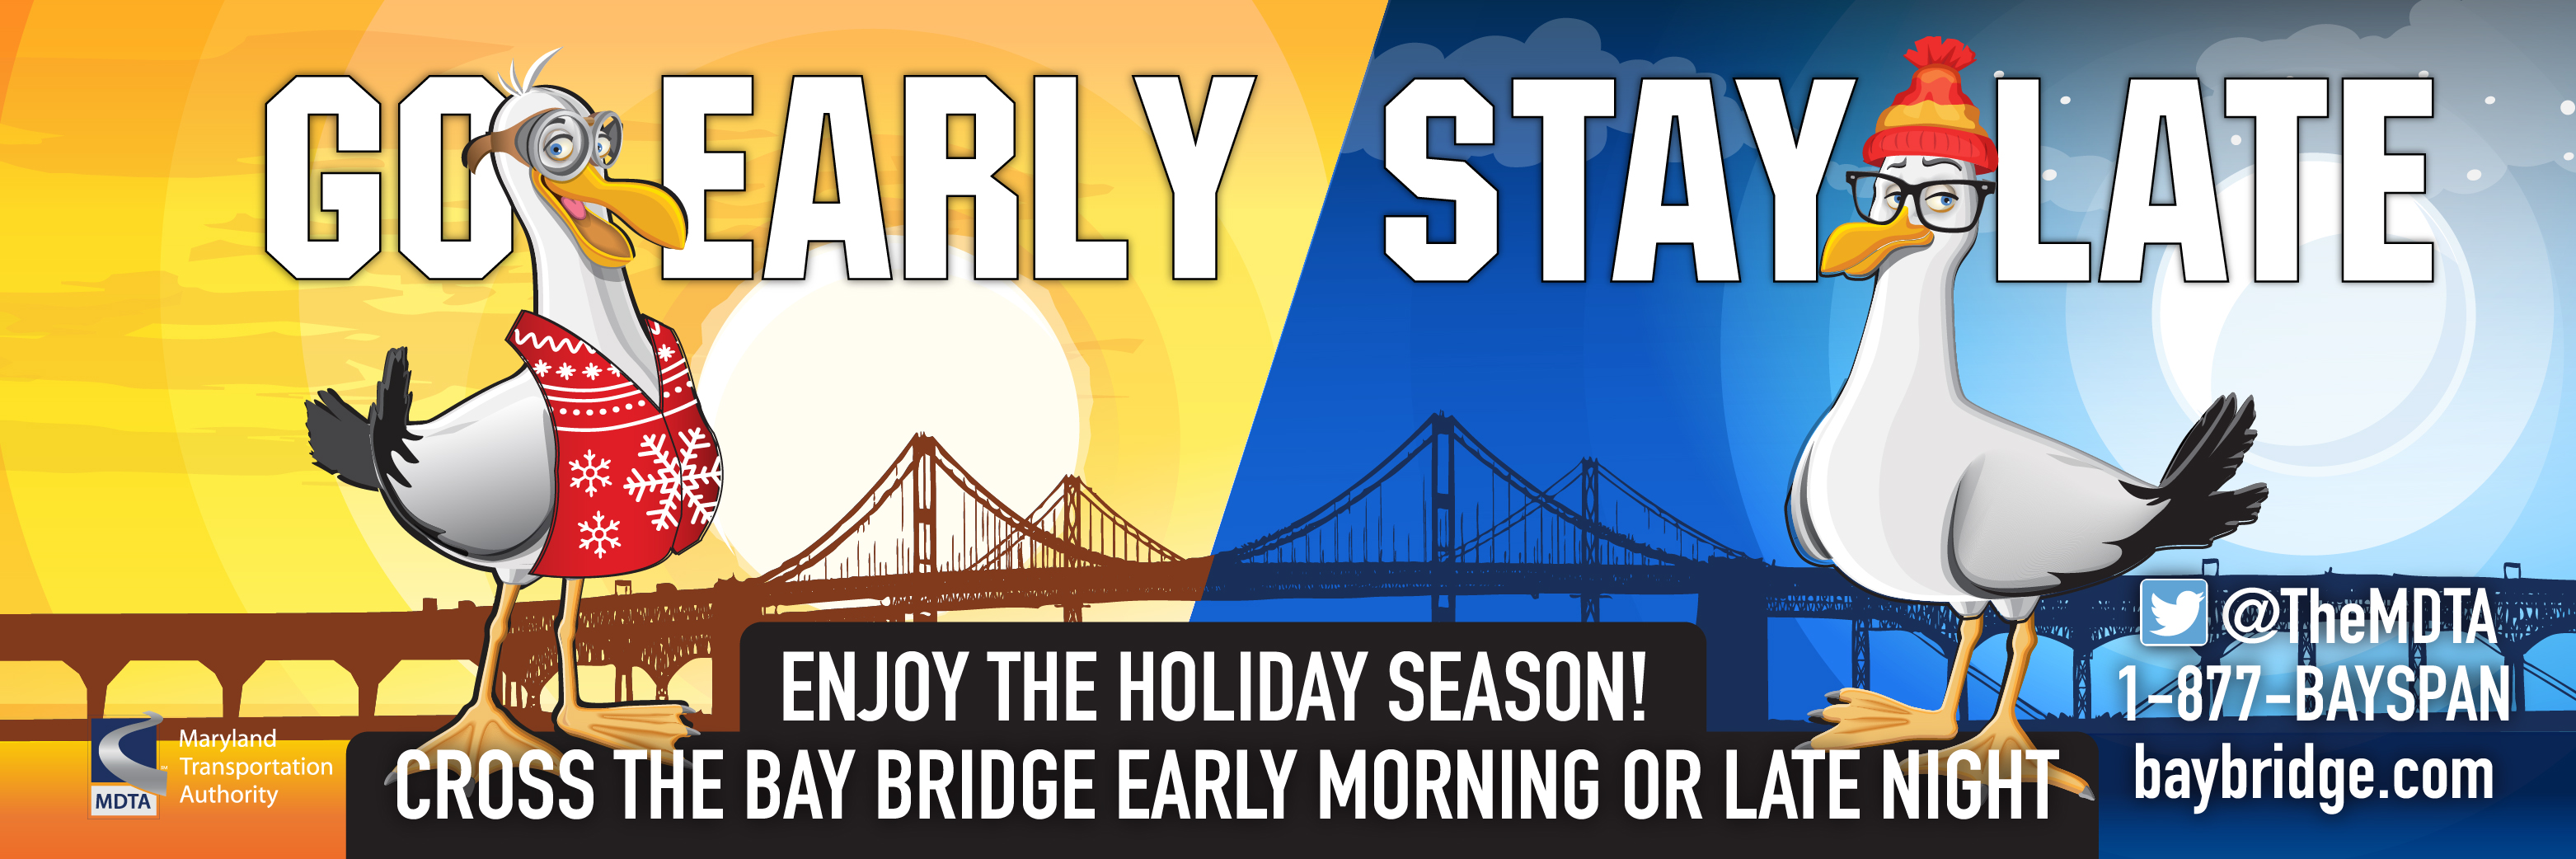 Go Early Stay Late - Enjoy the Holiday Season!